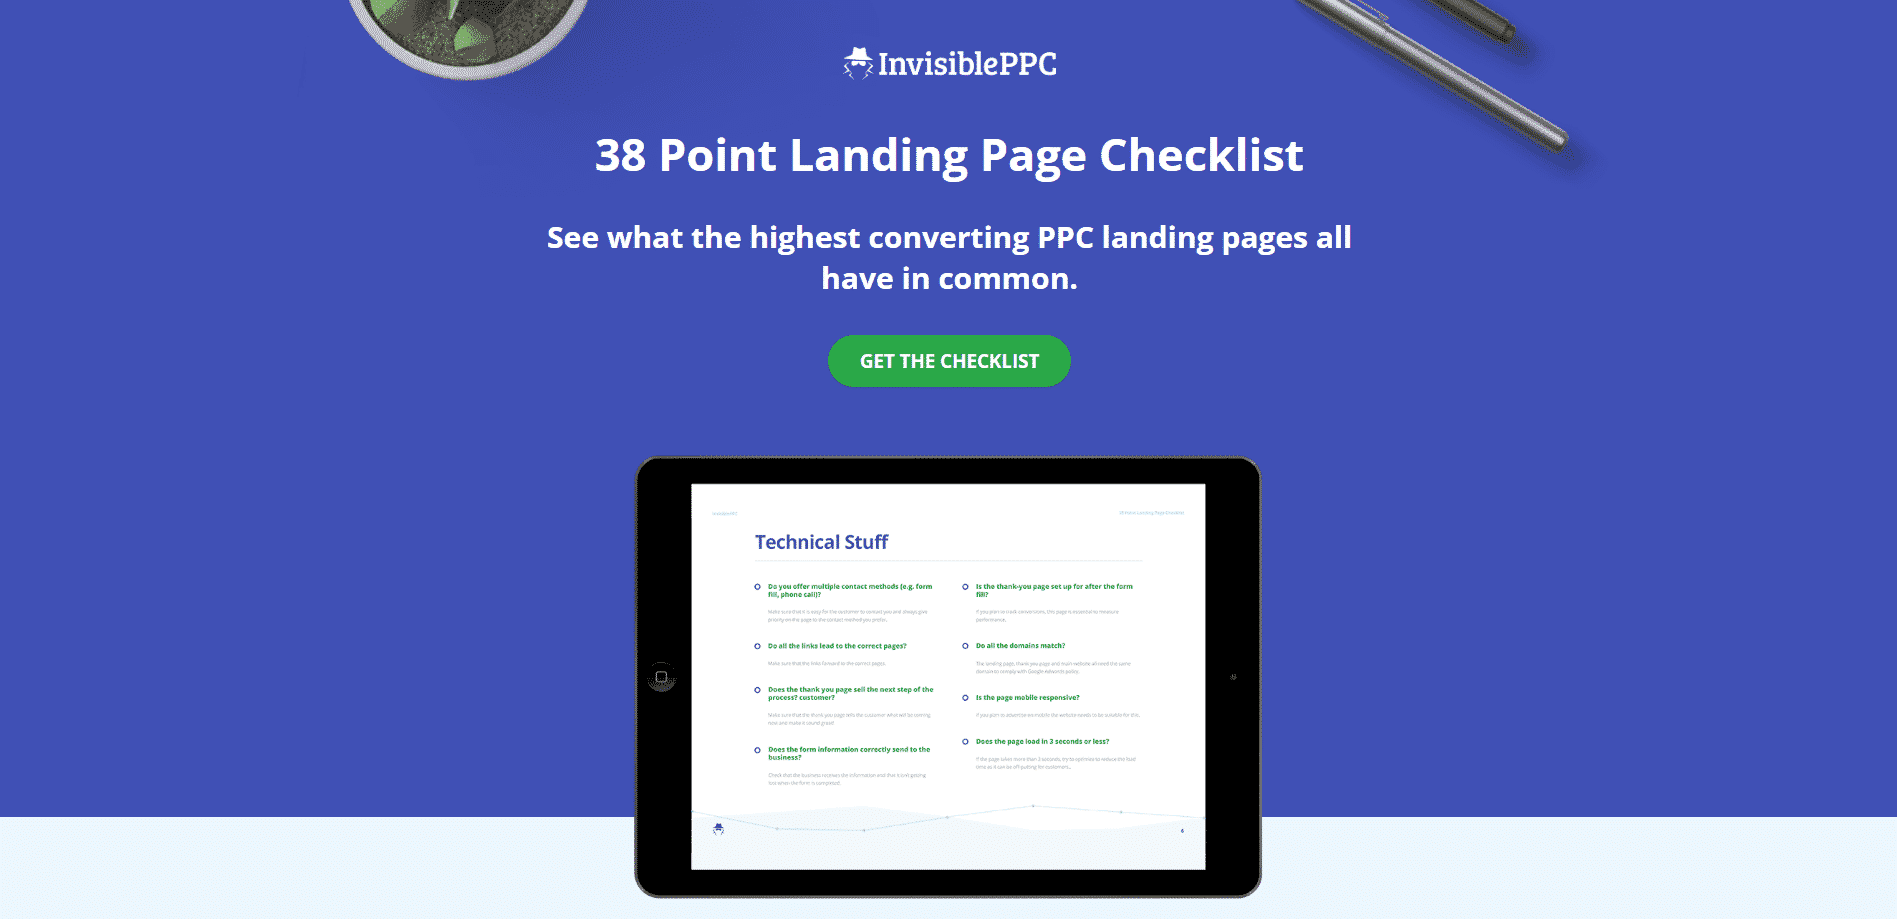 IPPC-38-point-landing-page-checklist-image